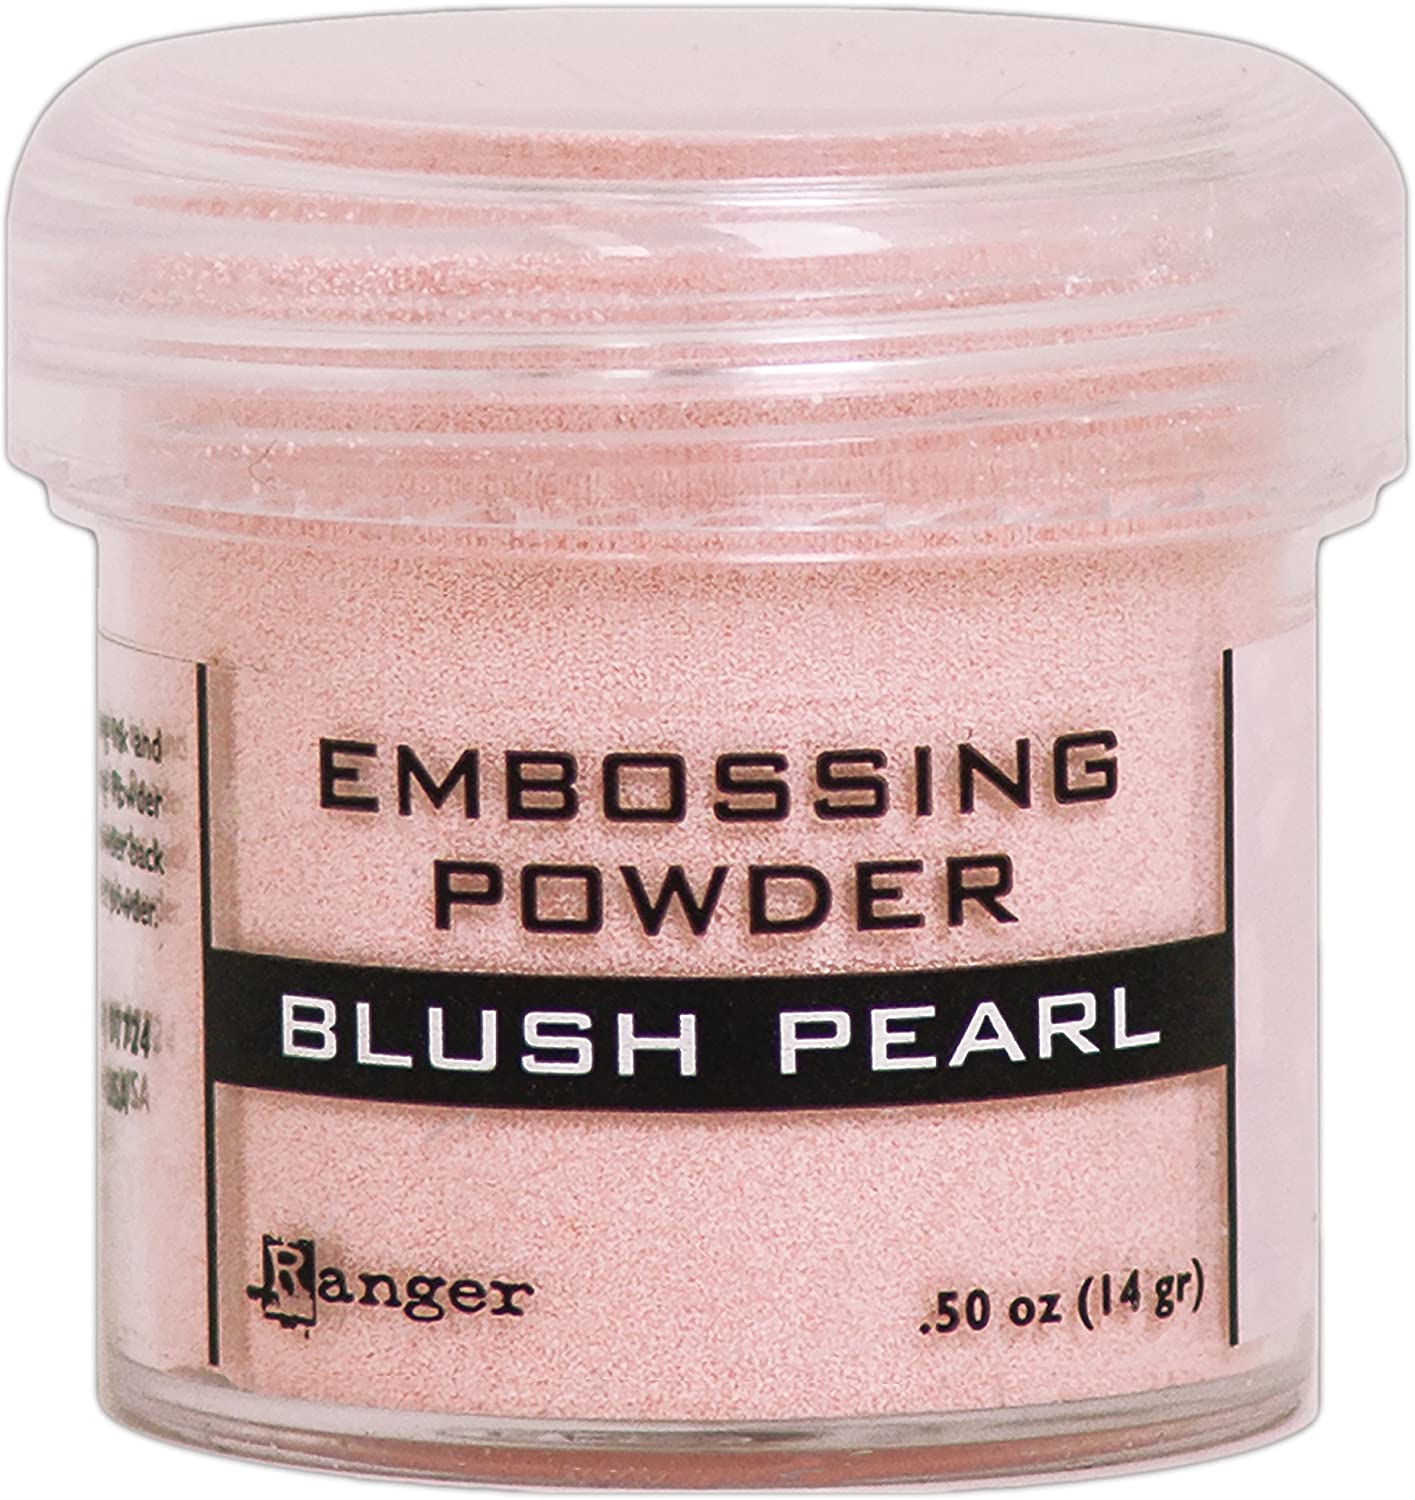 Polvo para Embossing - Blush Pearl